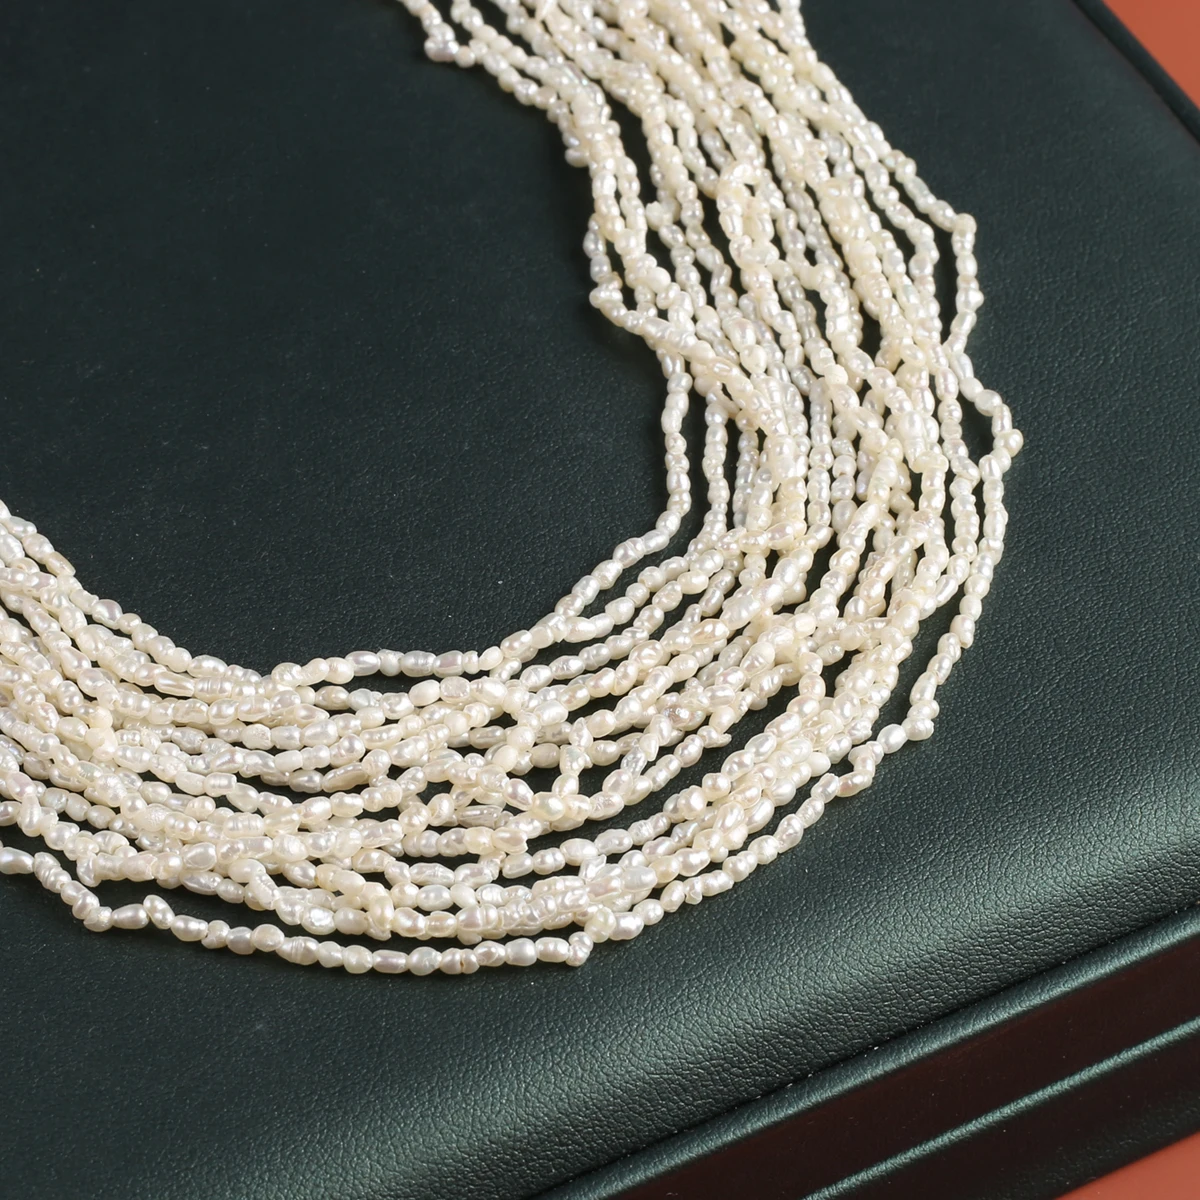 Acrylic Bracelet Necklace Accessories  Black Beads Jewelry Making - 100pcs  7x10mm - Aliexpress